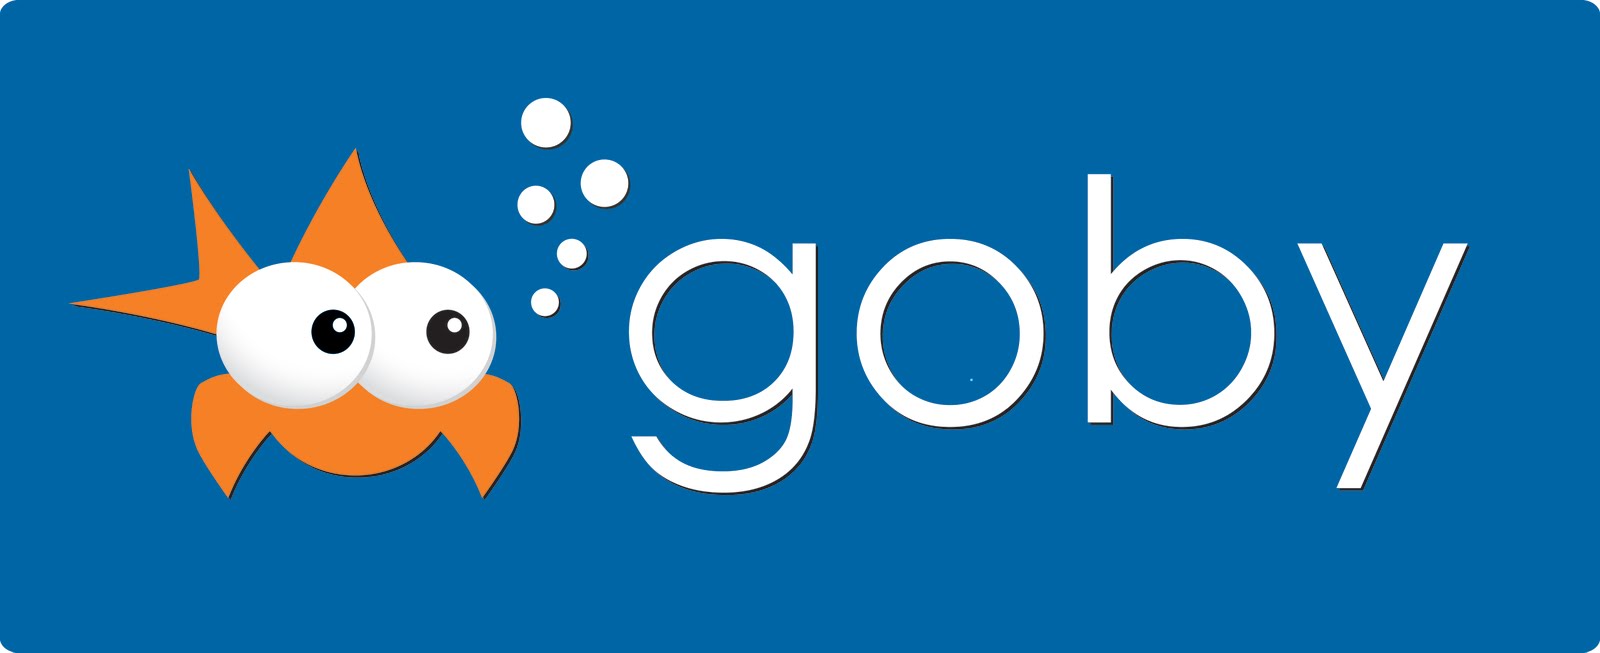 goby-logo-760420.jpg